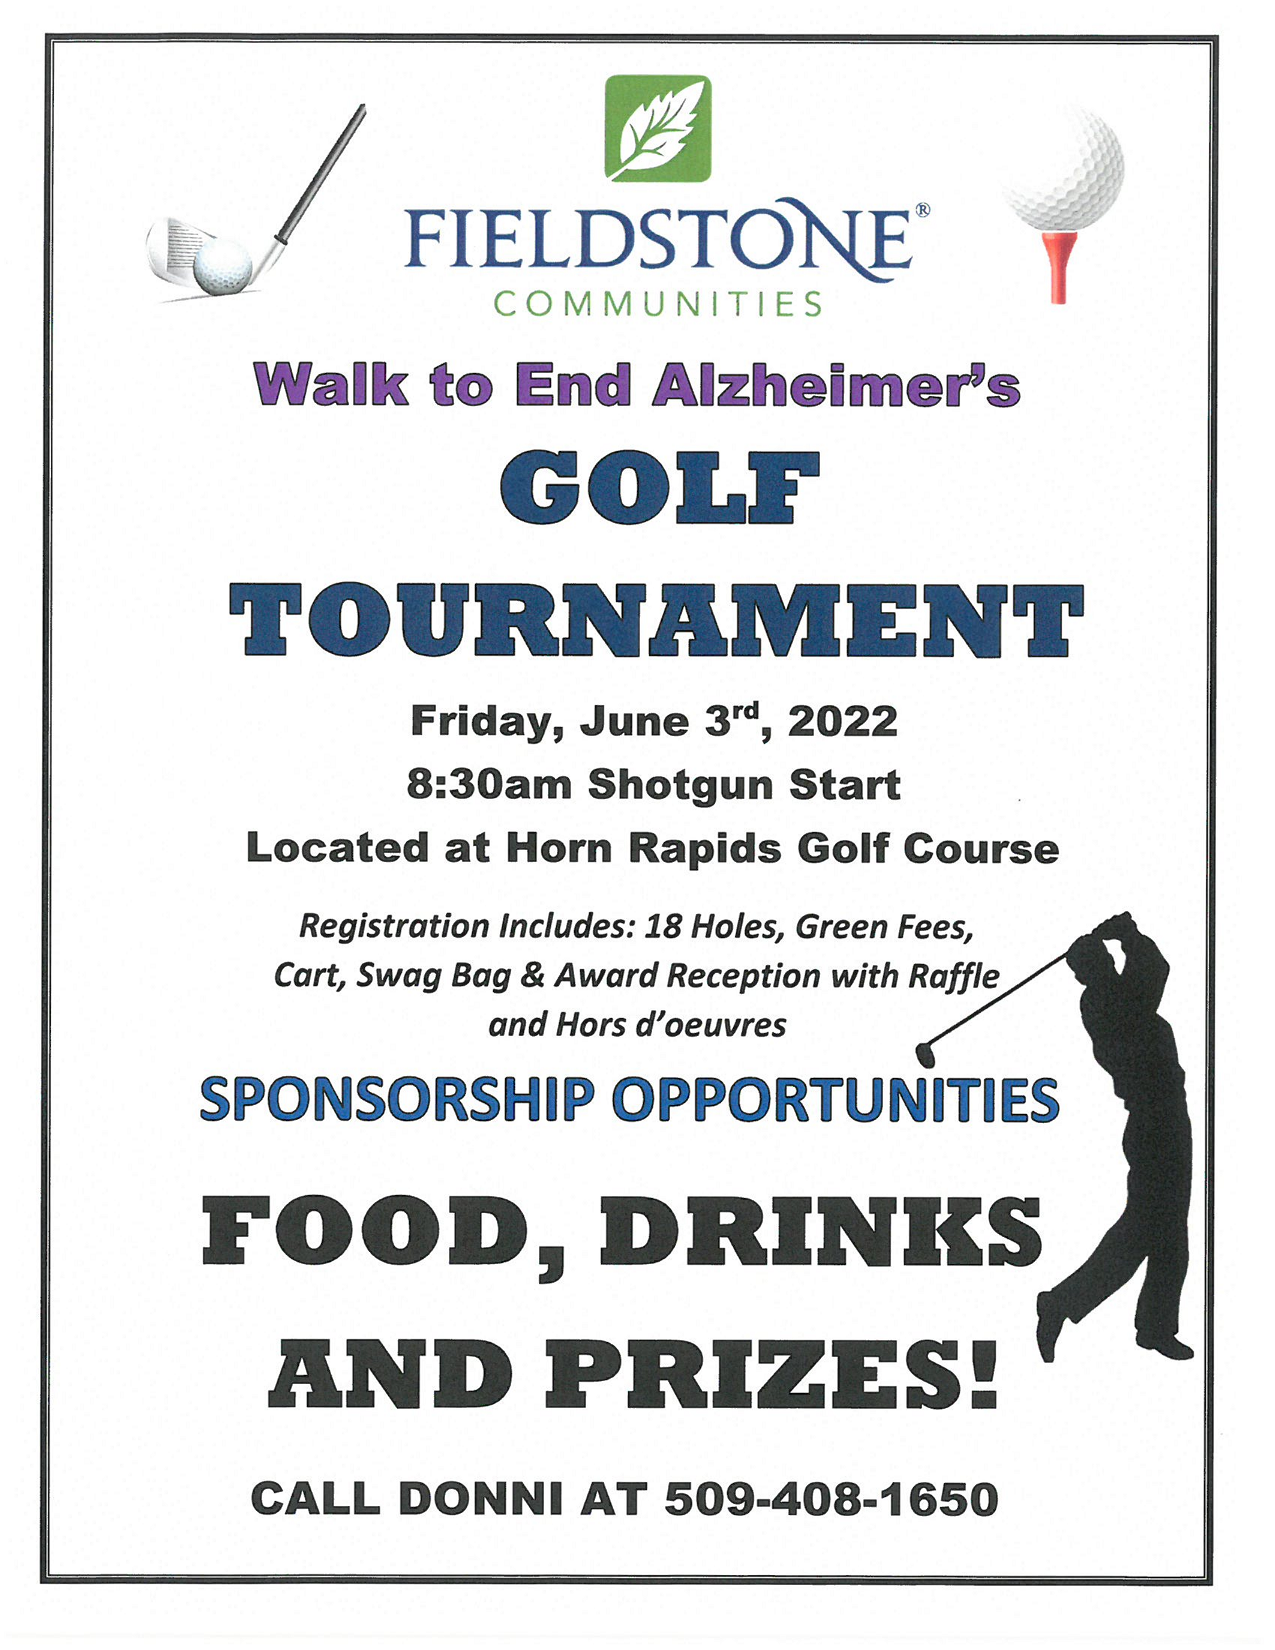 Fieldstone Golf Tournemanet Flyer 2022.png